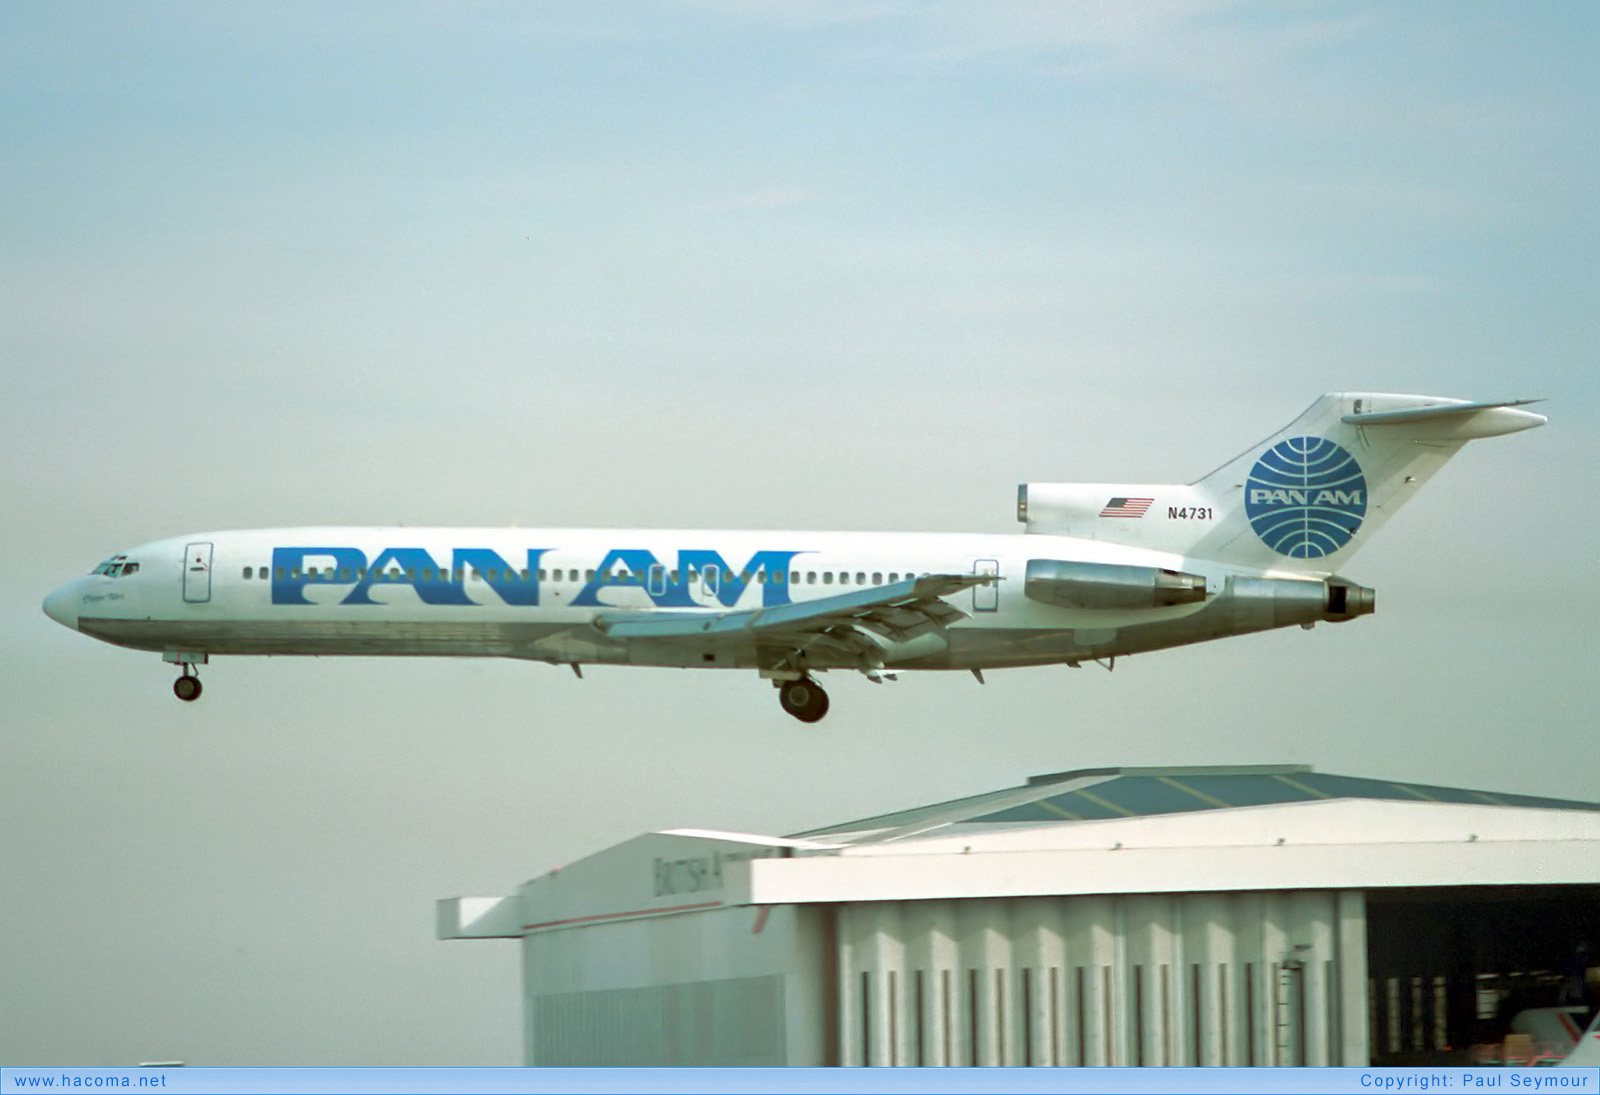 Photo of N4731 - Pan Am Clipper Alert - London Heathrow Airport - Jul 28, 1990